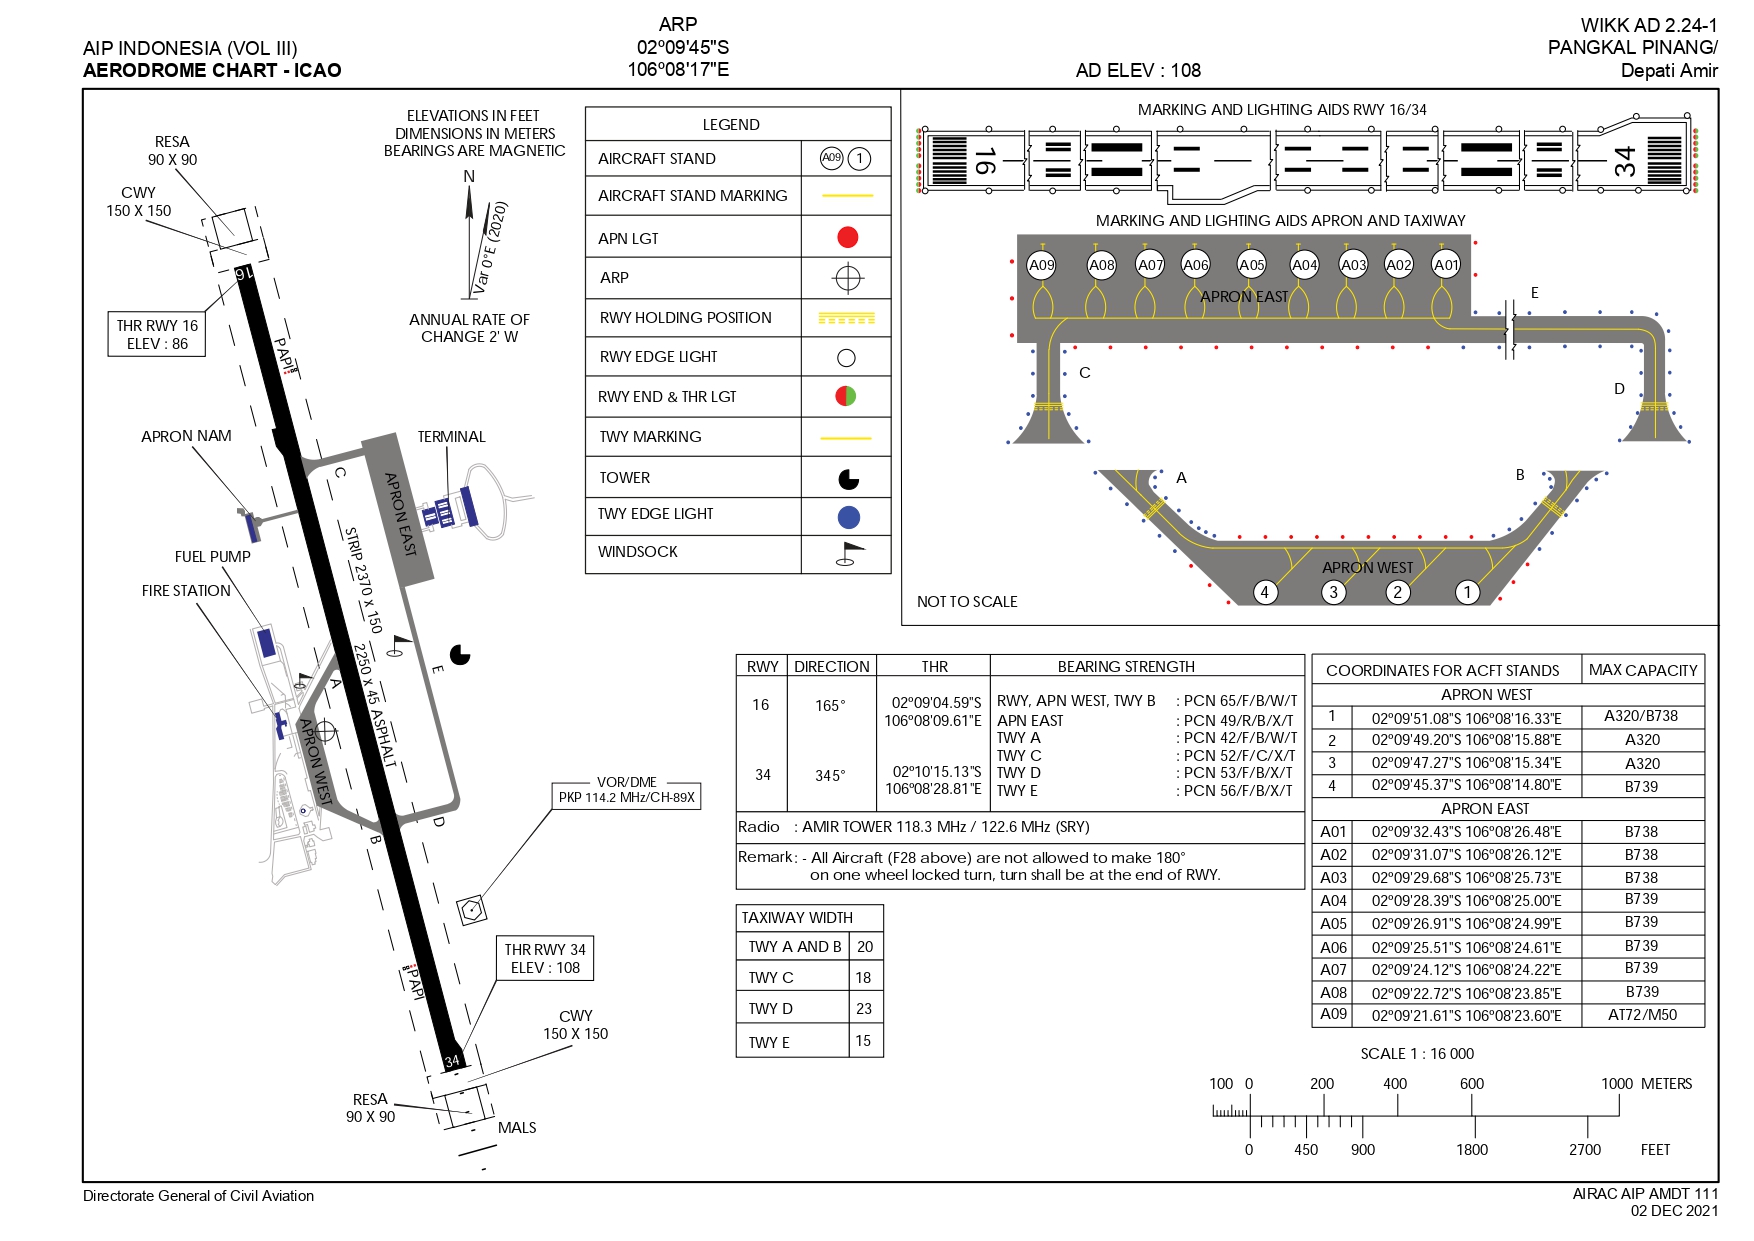 Gambar Peta Bandara AERODROME CHART DEPATI AMIR/PANGKAL PINANG